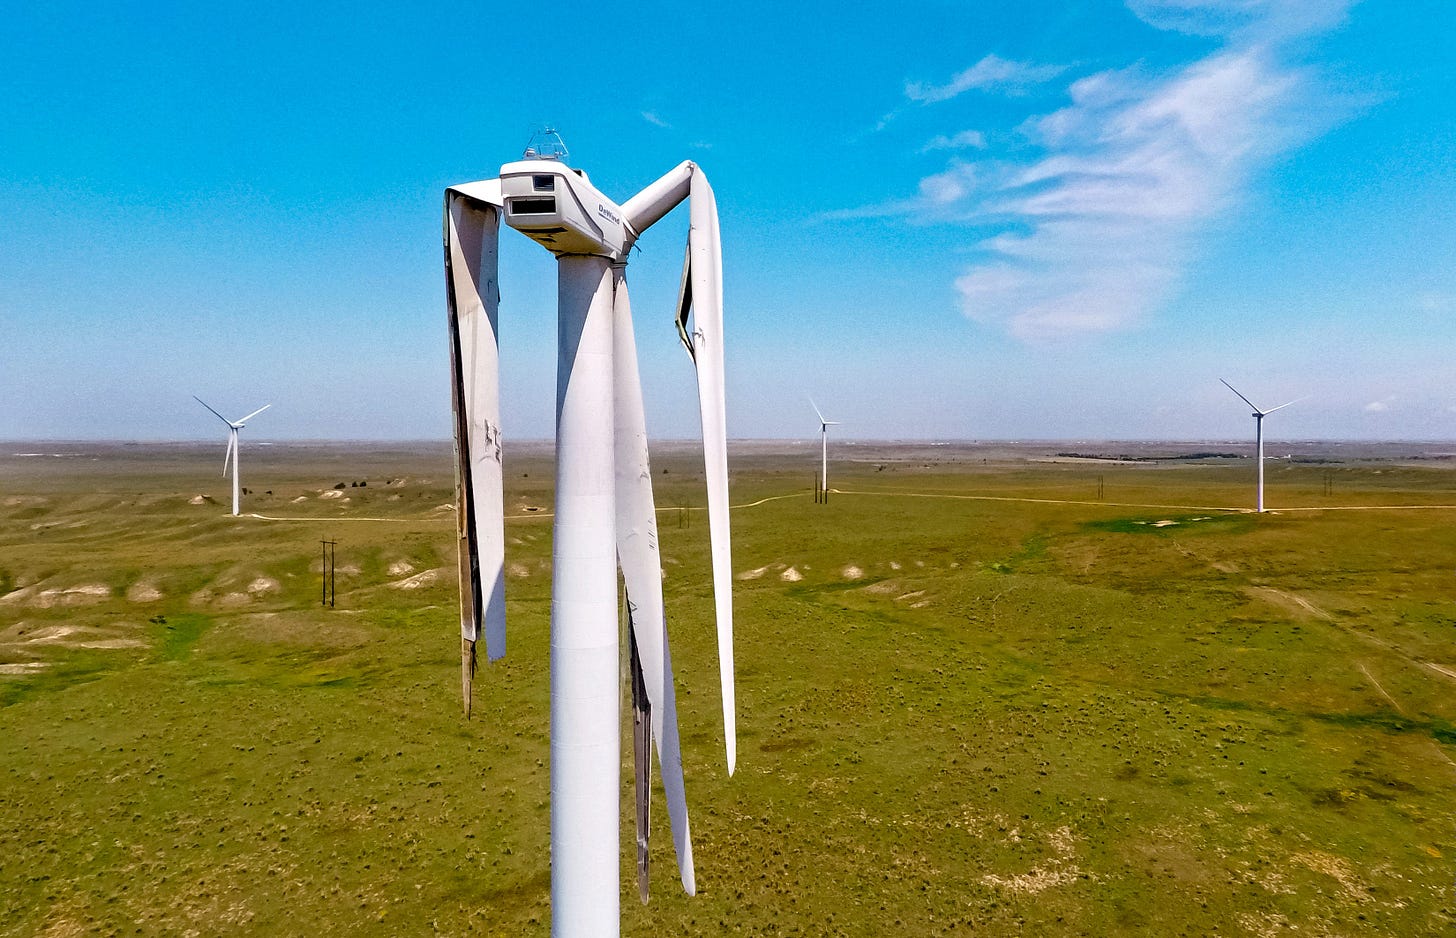 Dilapidated Panhandle wind farm poses safety threats, regulators say